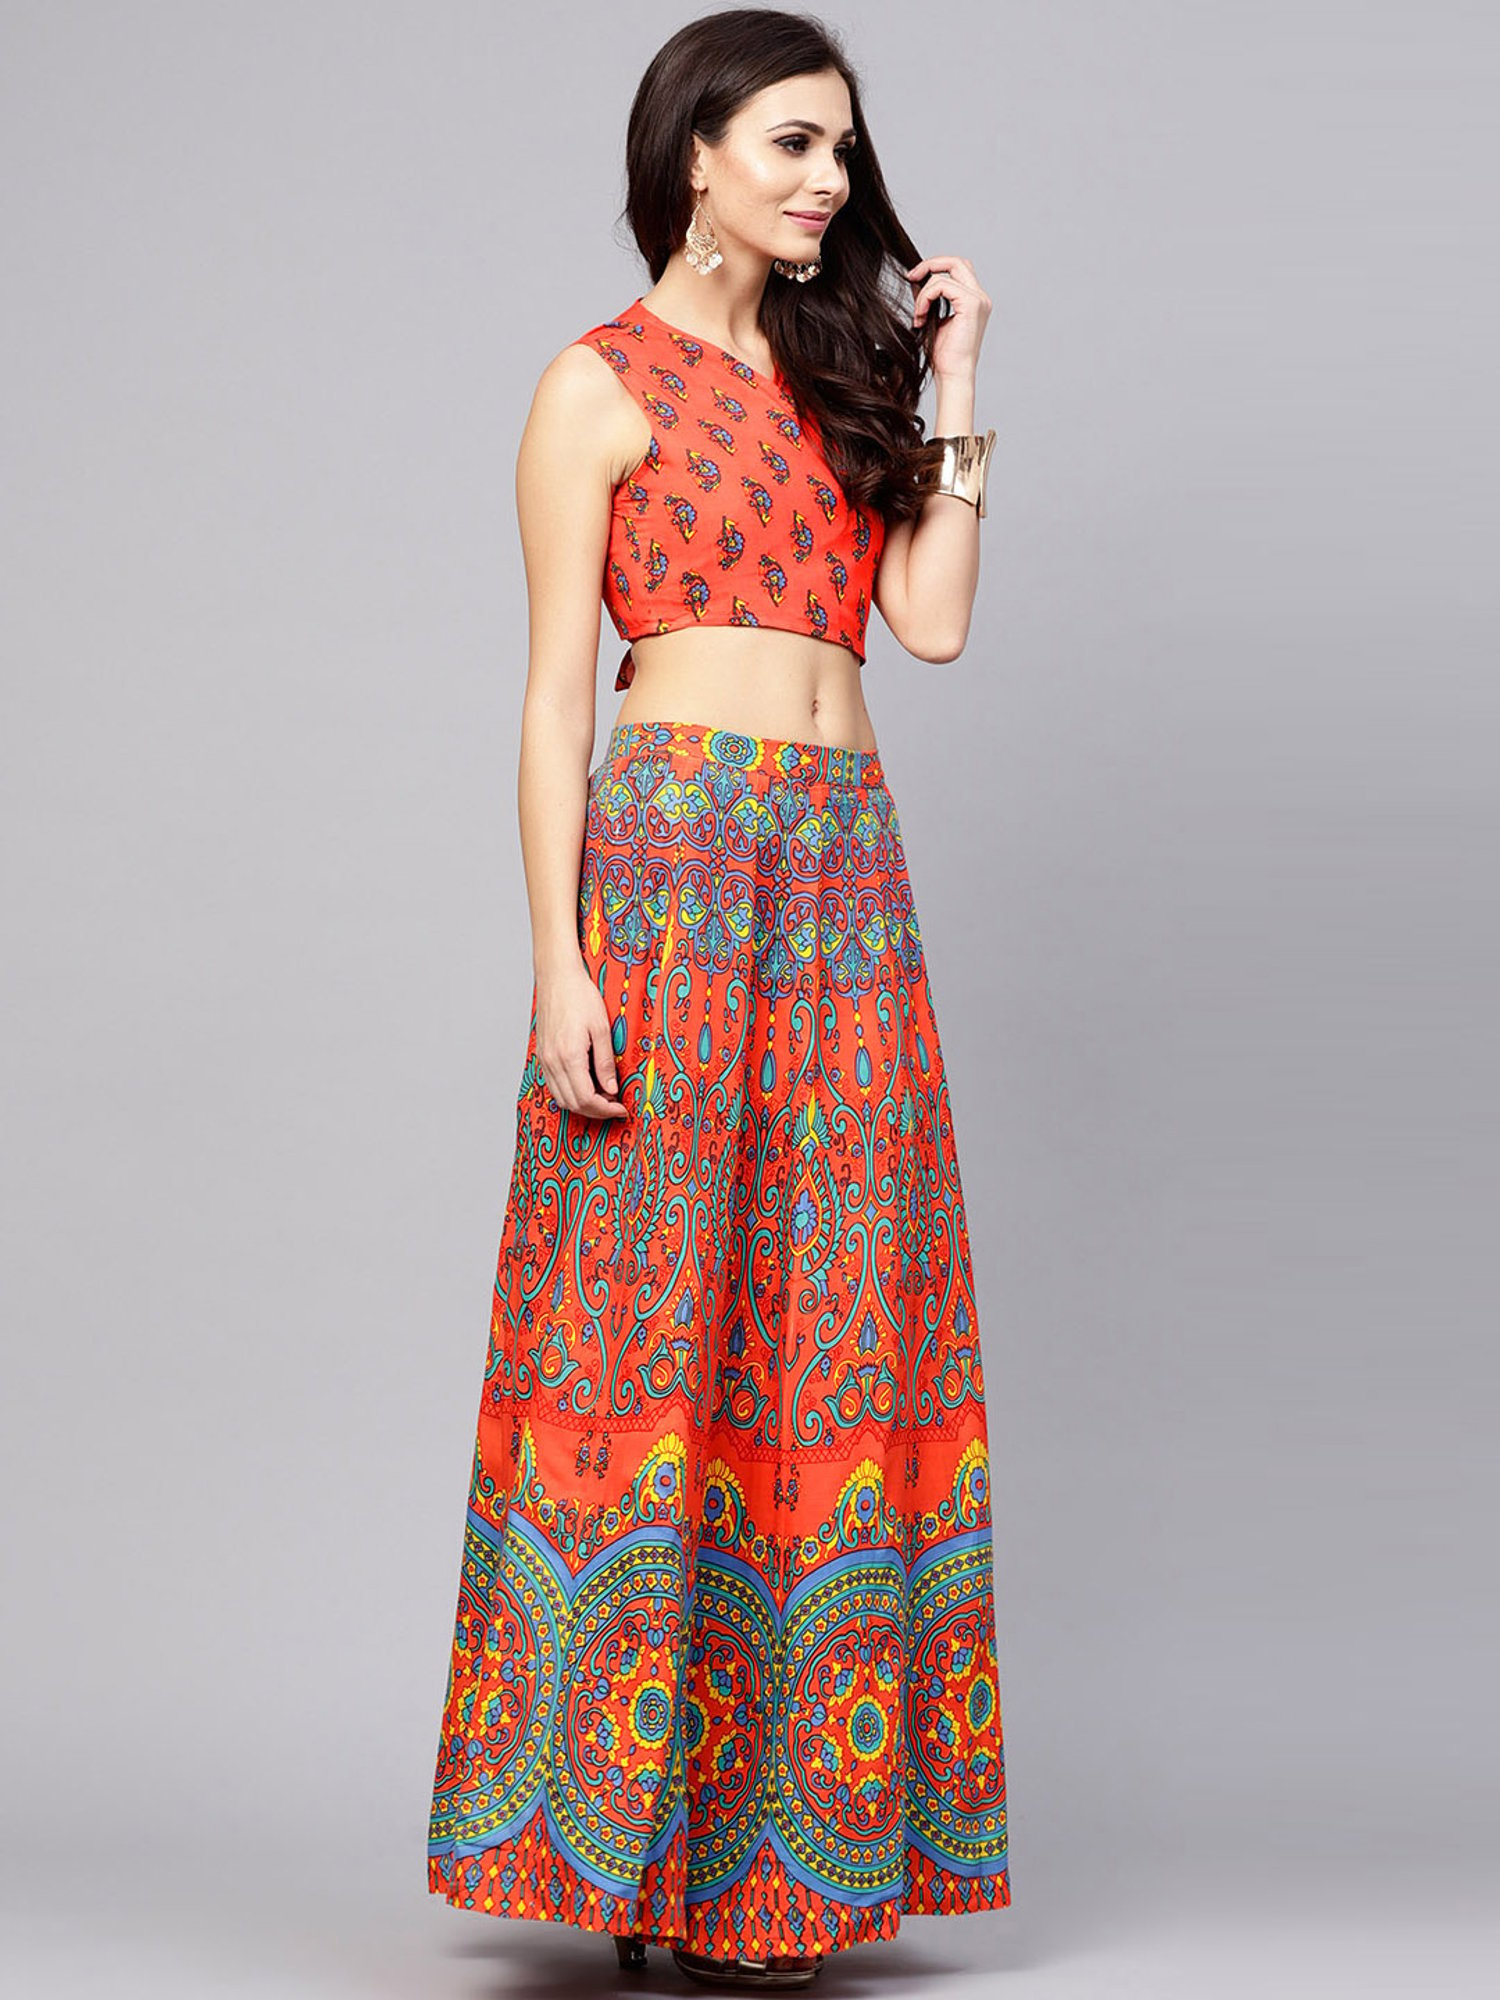 Onange Peel Heavy Embroidered Choli With Pant And Dupatta Set  SHREYA  AGARWAL  4045610